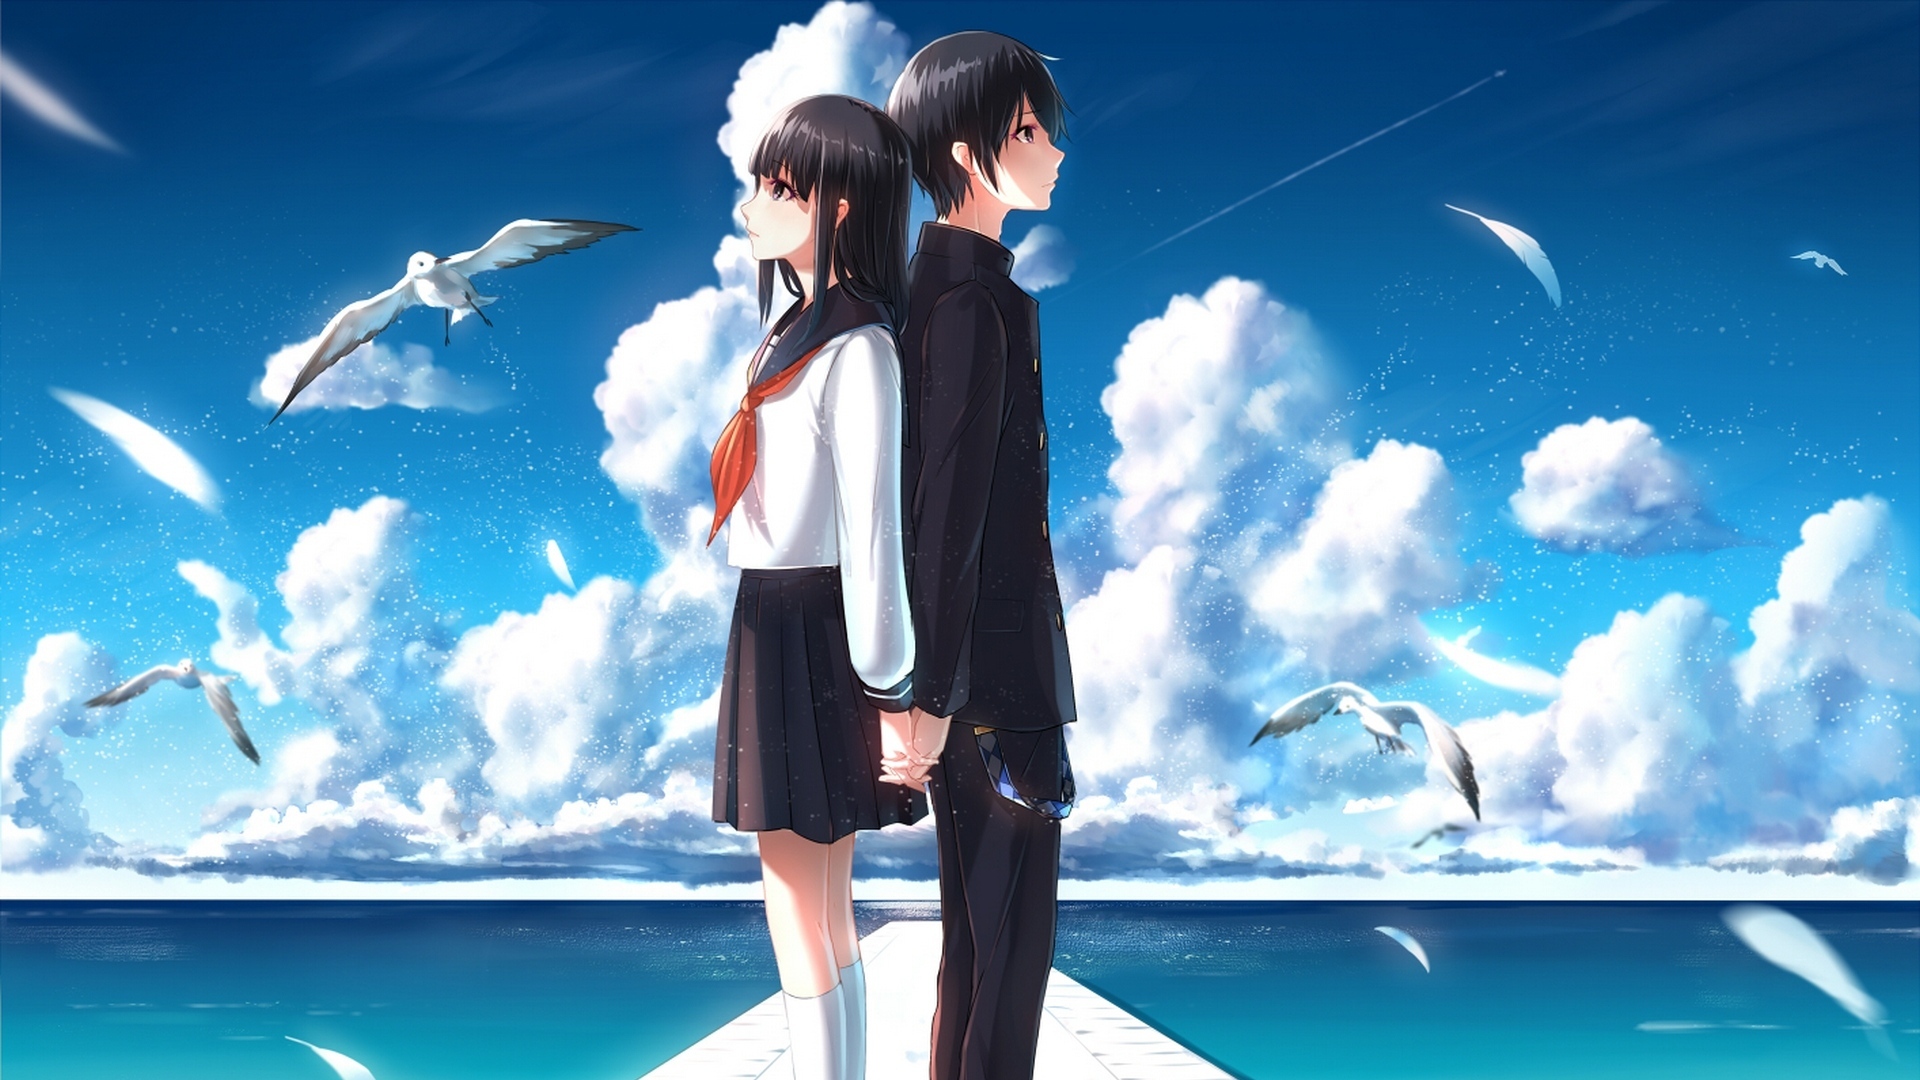 Anime Couple - Romance - Anime